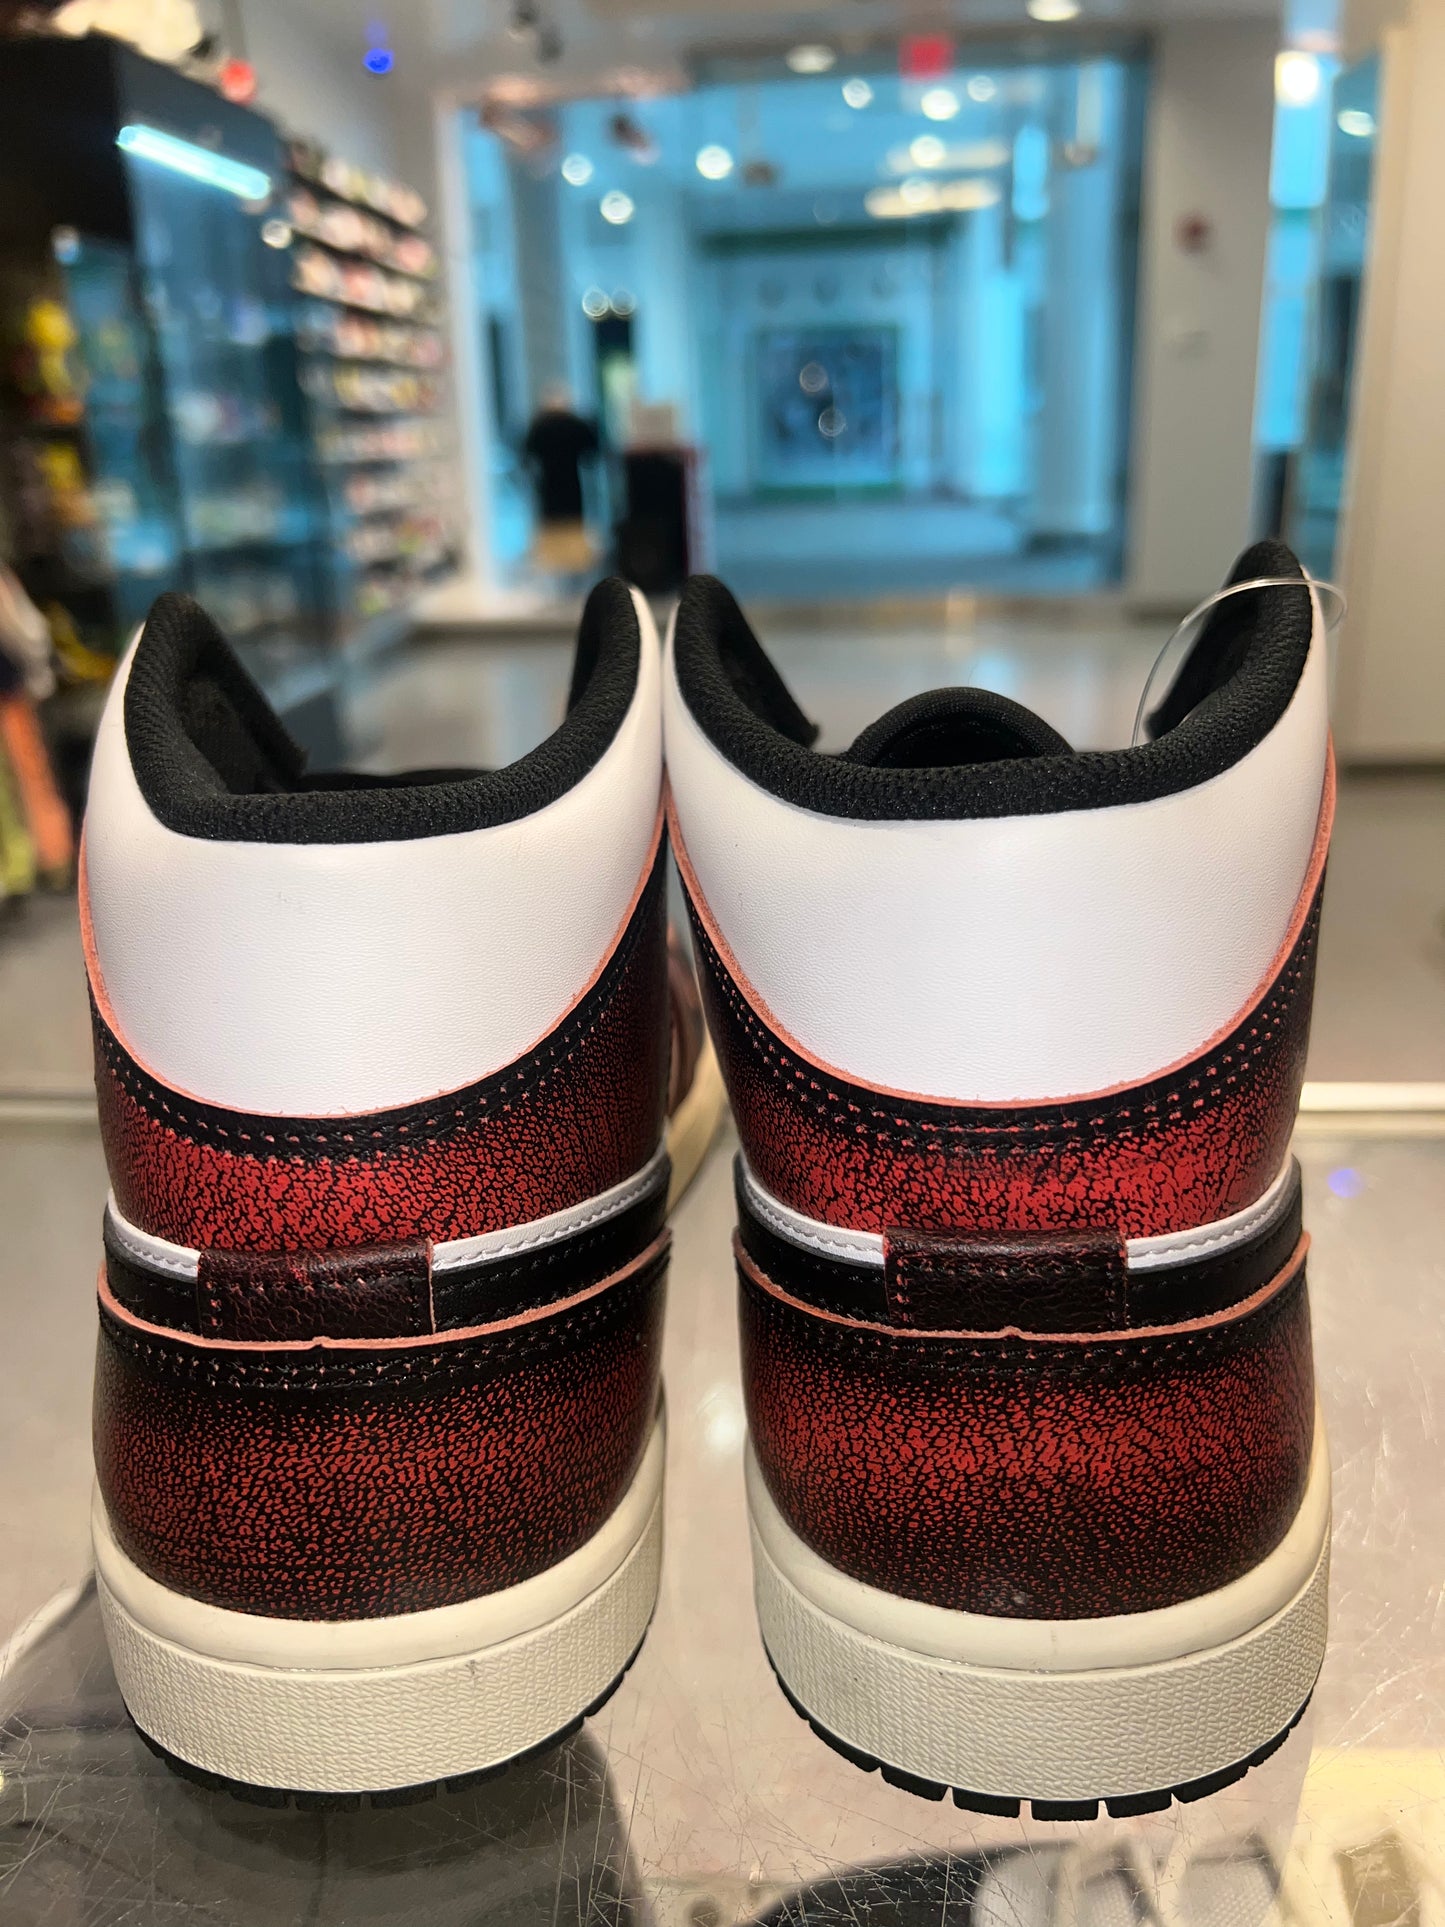 Size 9.5 Air Jordan 1 Mid “Wear Away Chicago” Brand New (Mall)